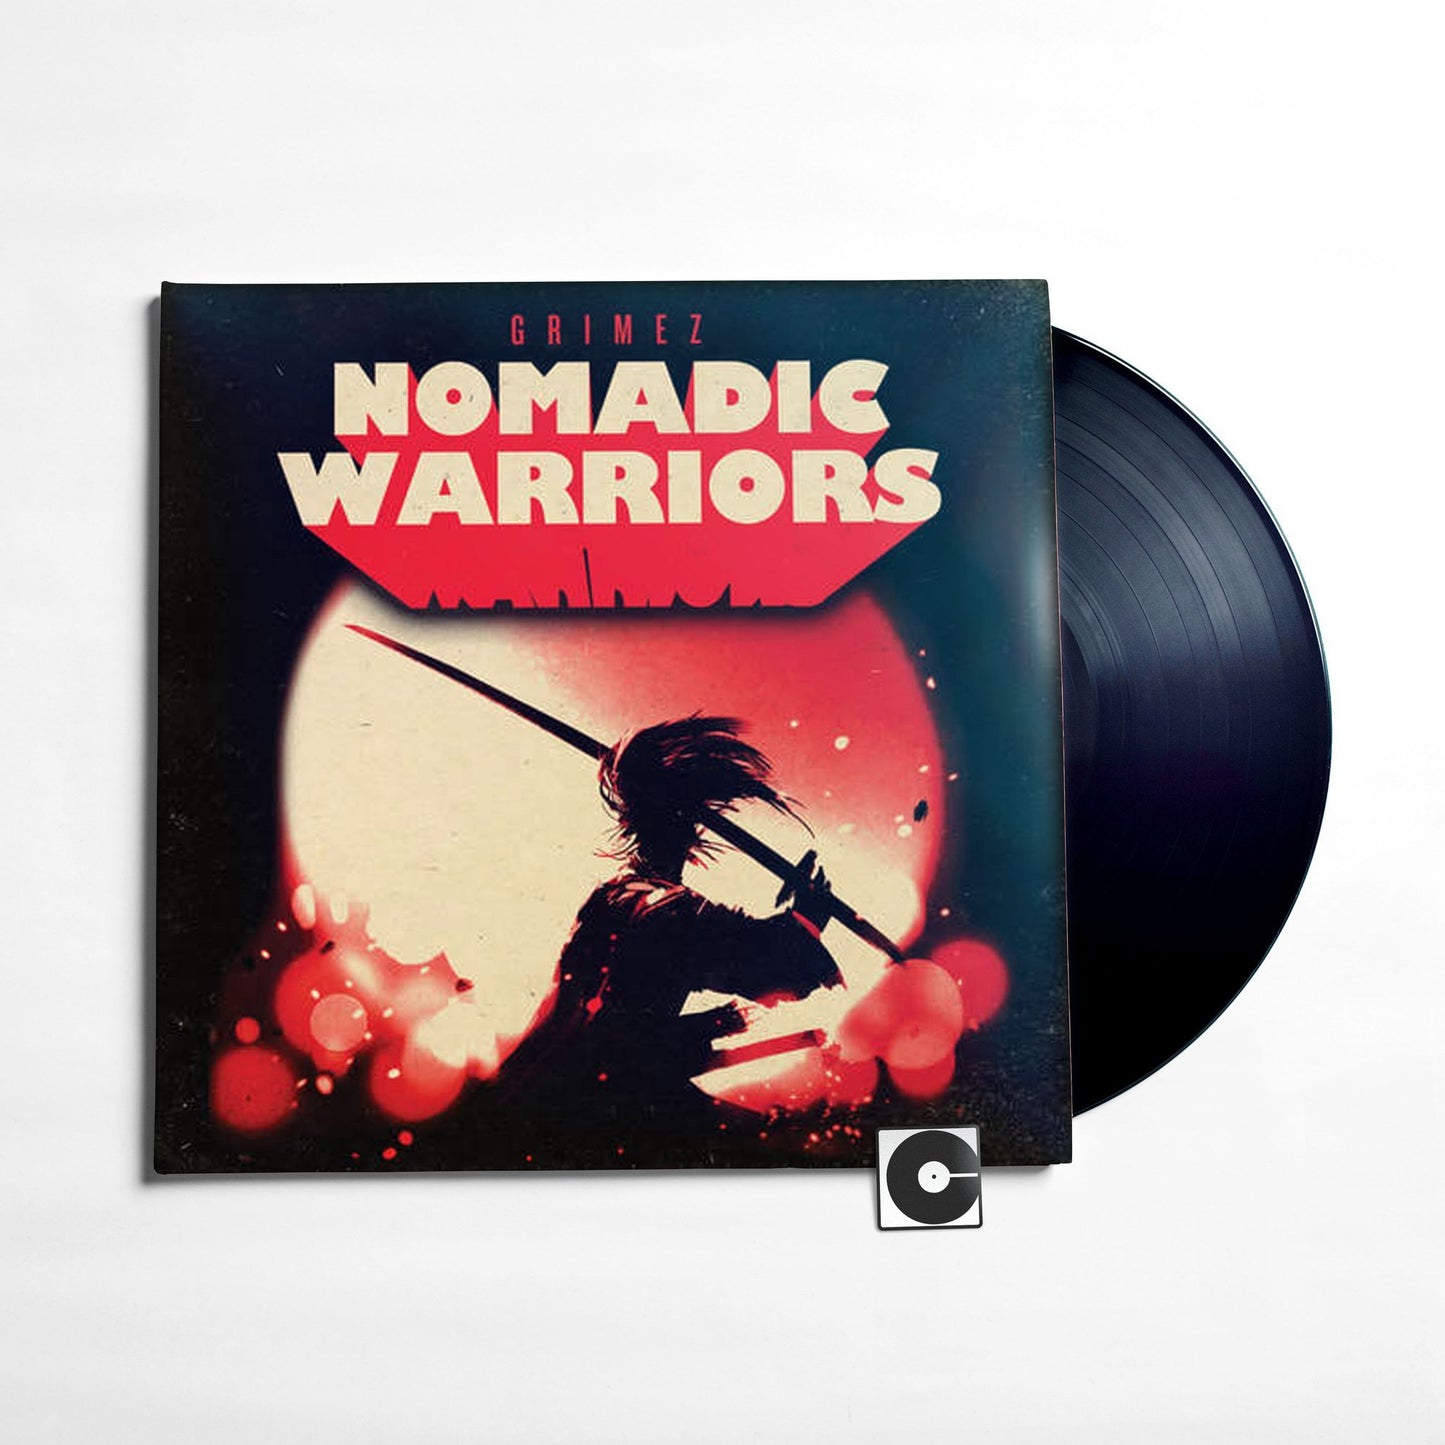 Grimez - "Nomadic Warriors"